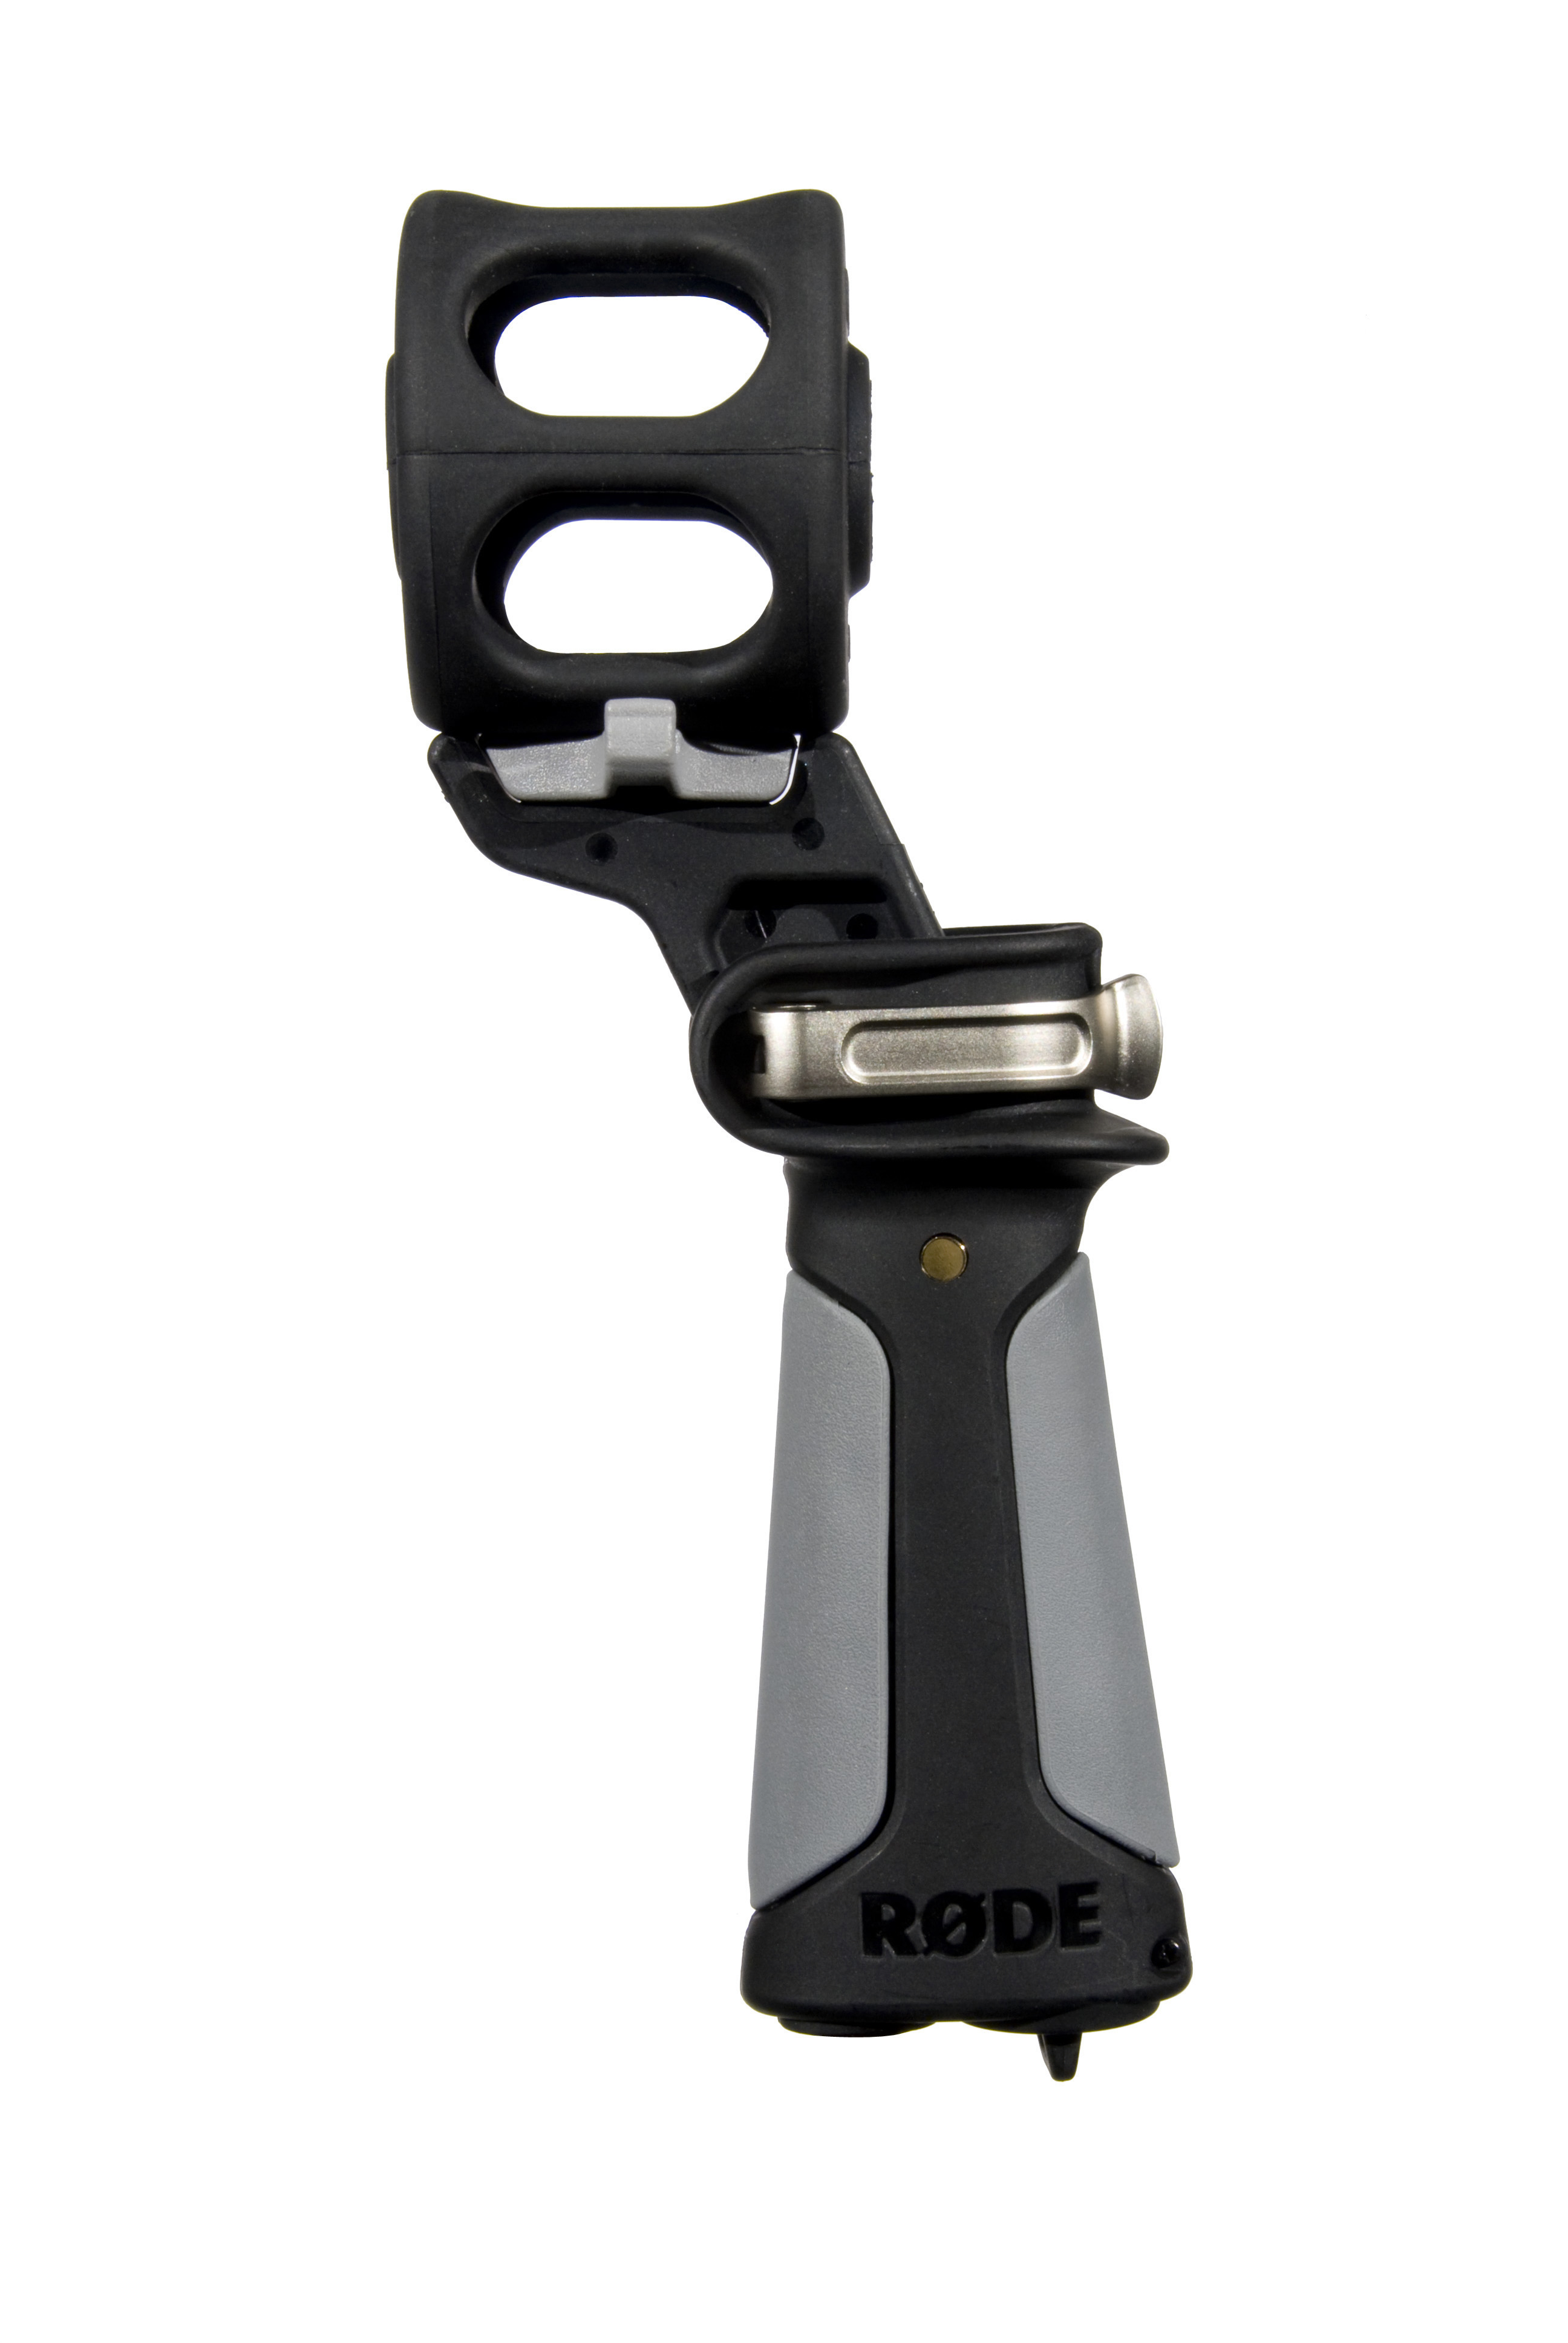 RODE Rode PG2 Pistol Grip Shockmount for Shotgun Microphones